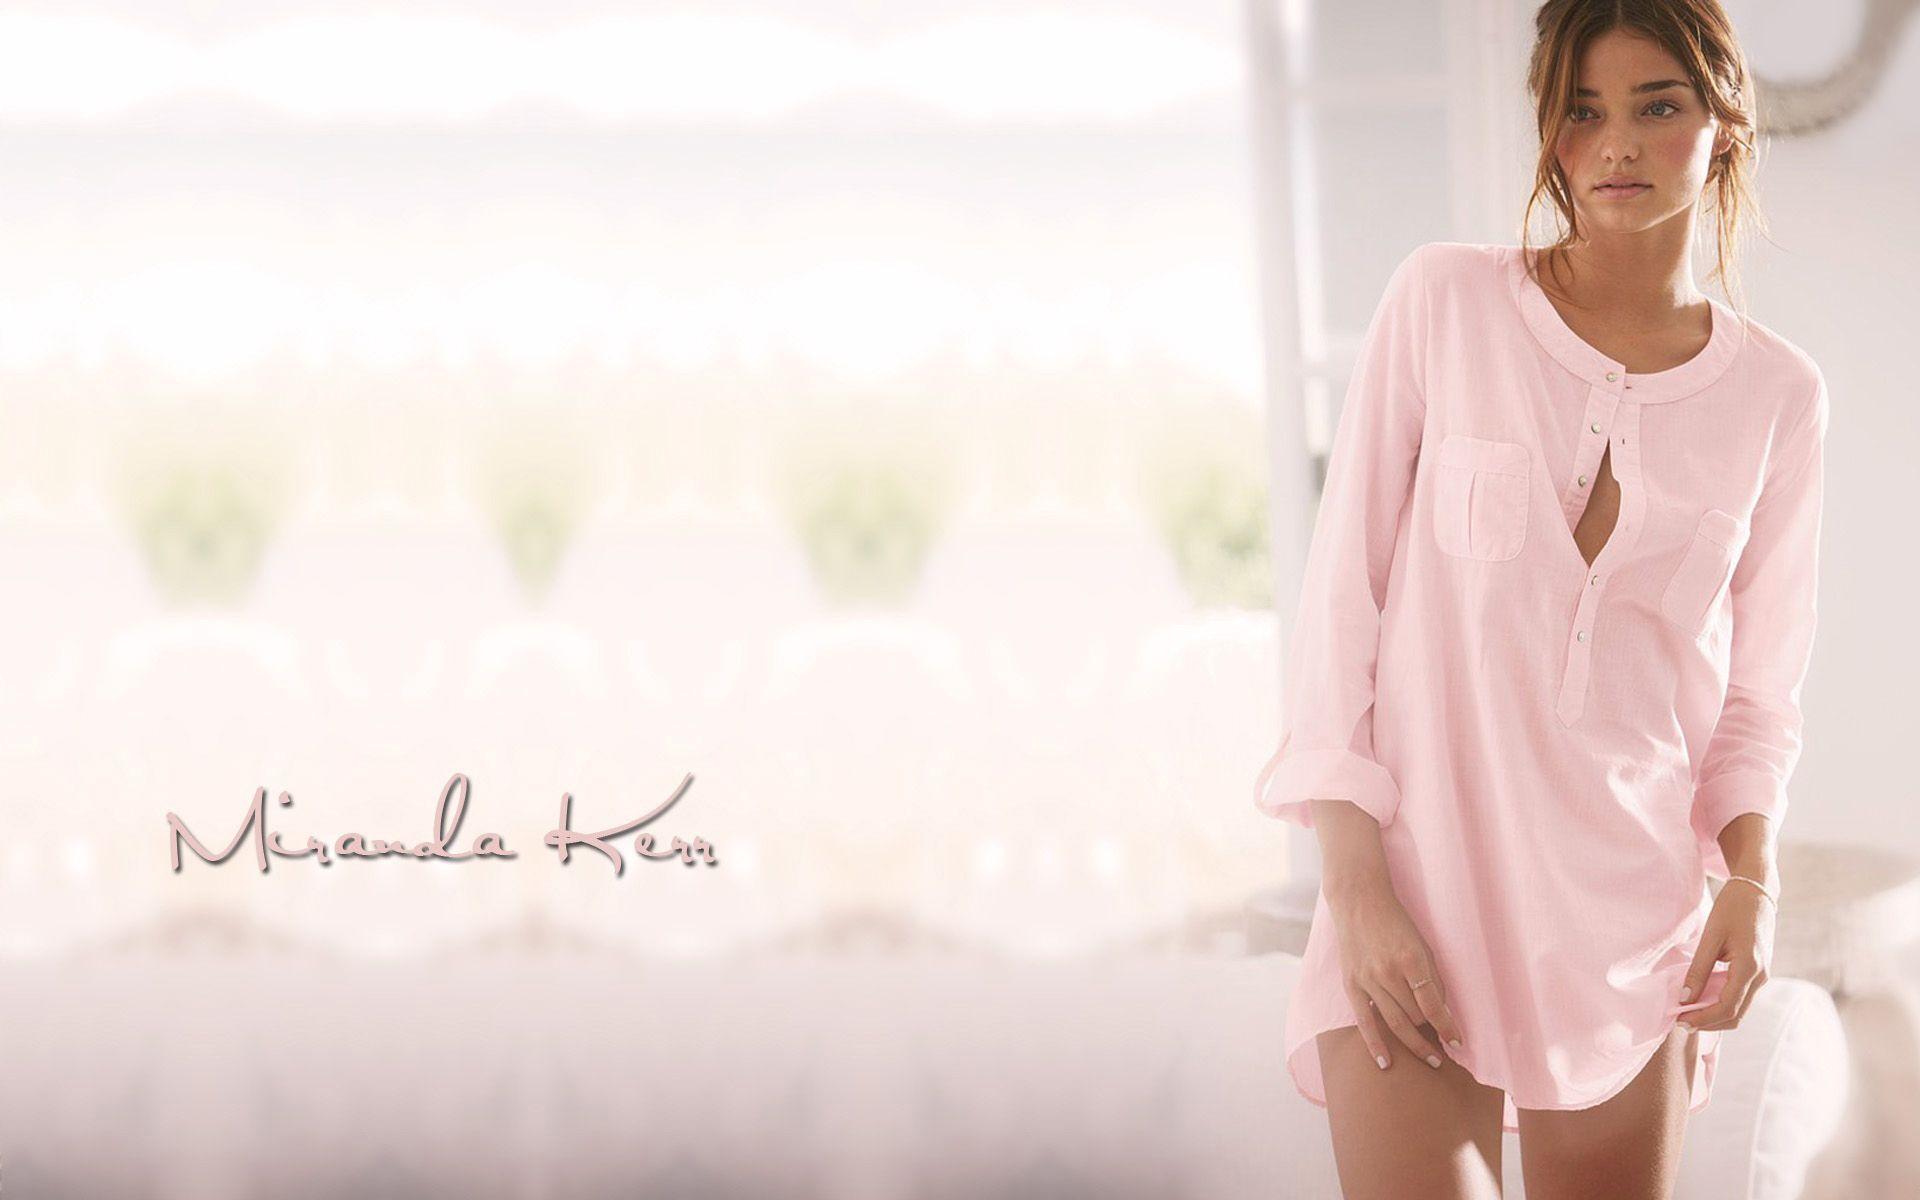 Miranda Kerr Full HD Wallpaper and Background Imagex1200